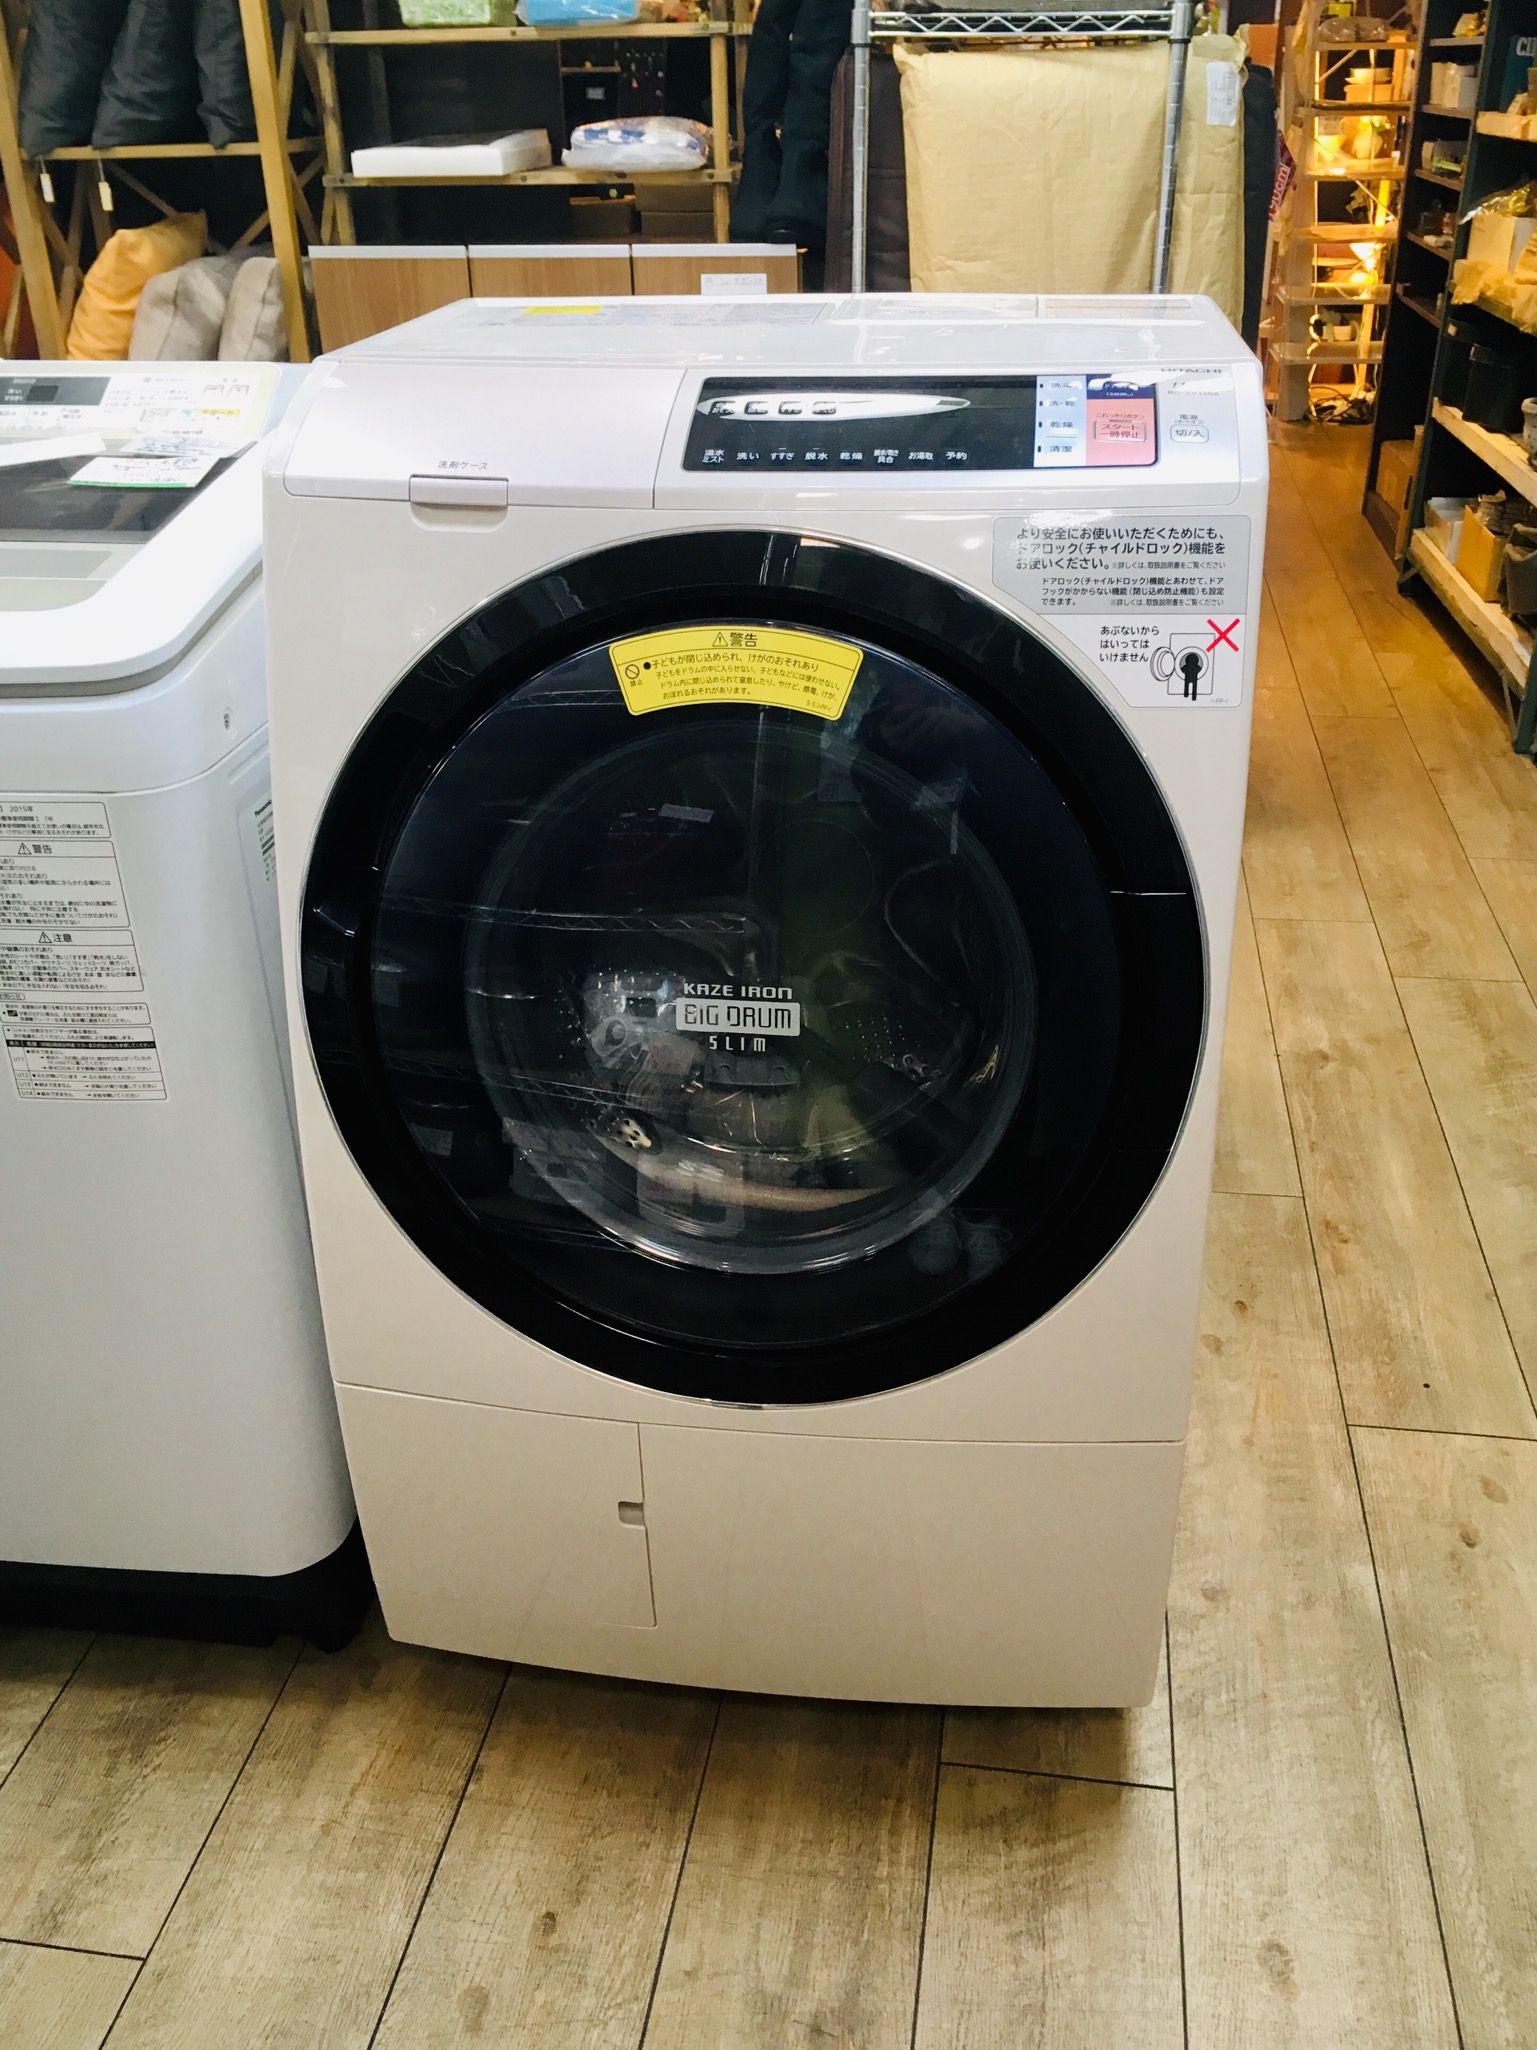 HITACHI＊ドラム式洗濯乾燥機(11Kg/6Kg)買取しました！ | 愛知と岐阜のリサイクルショップ 再良市場